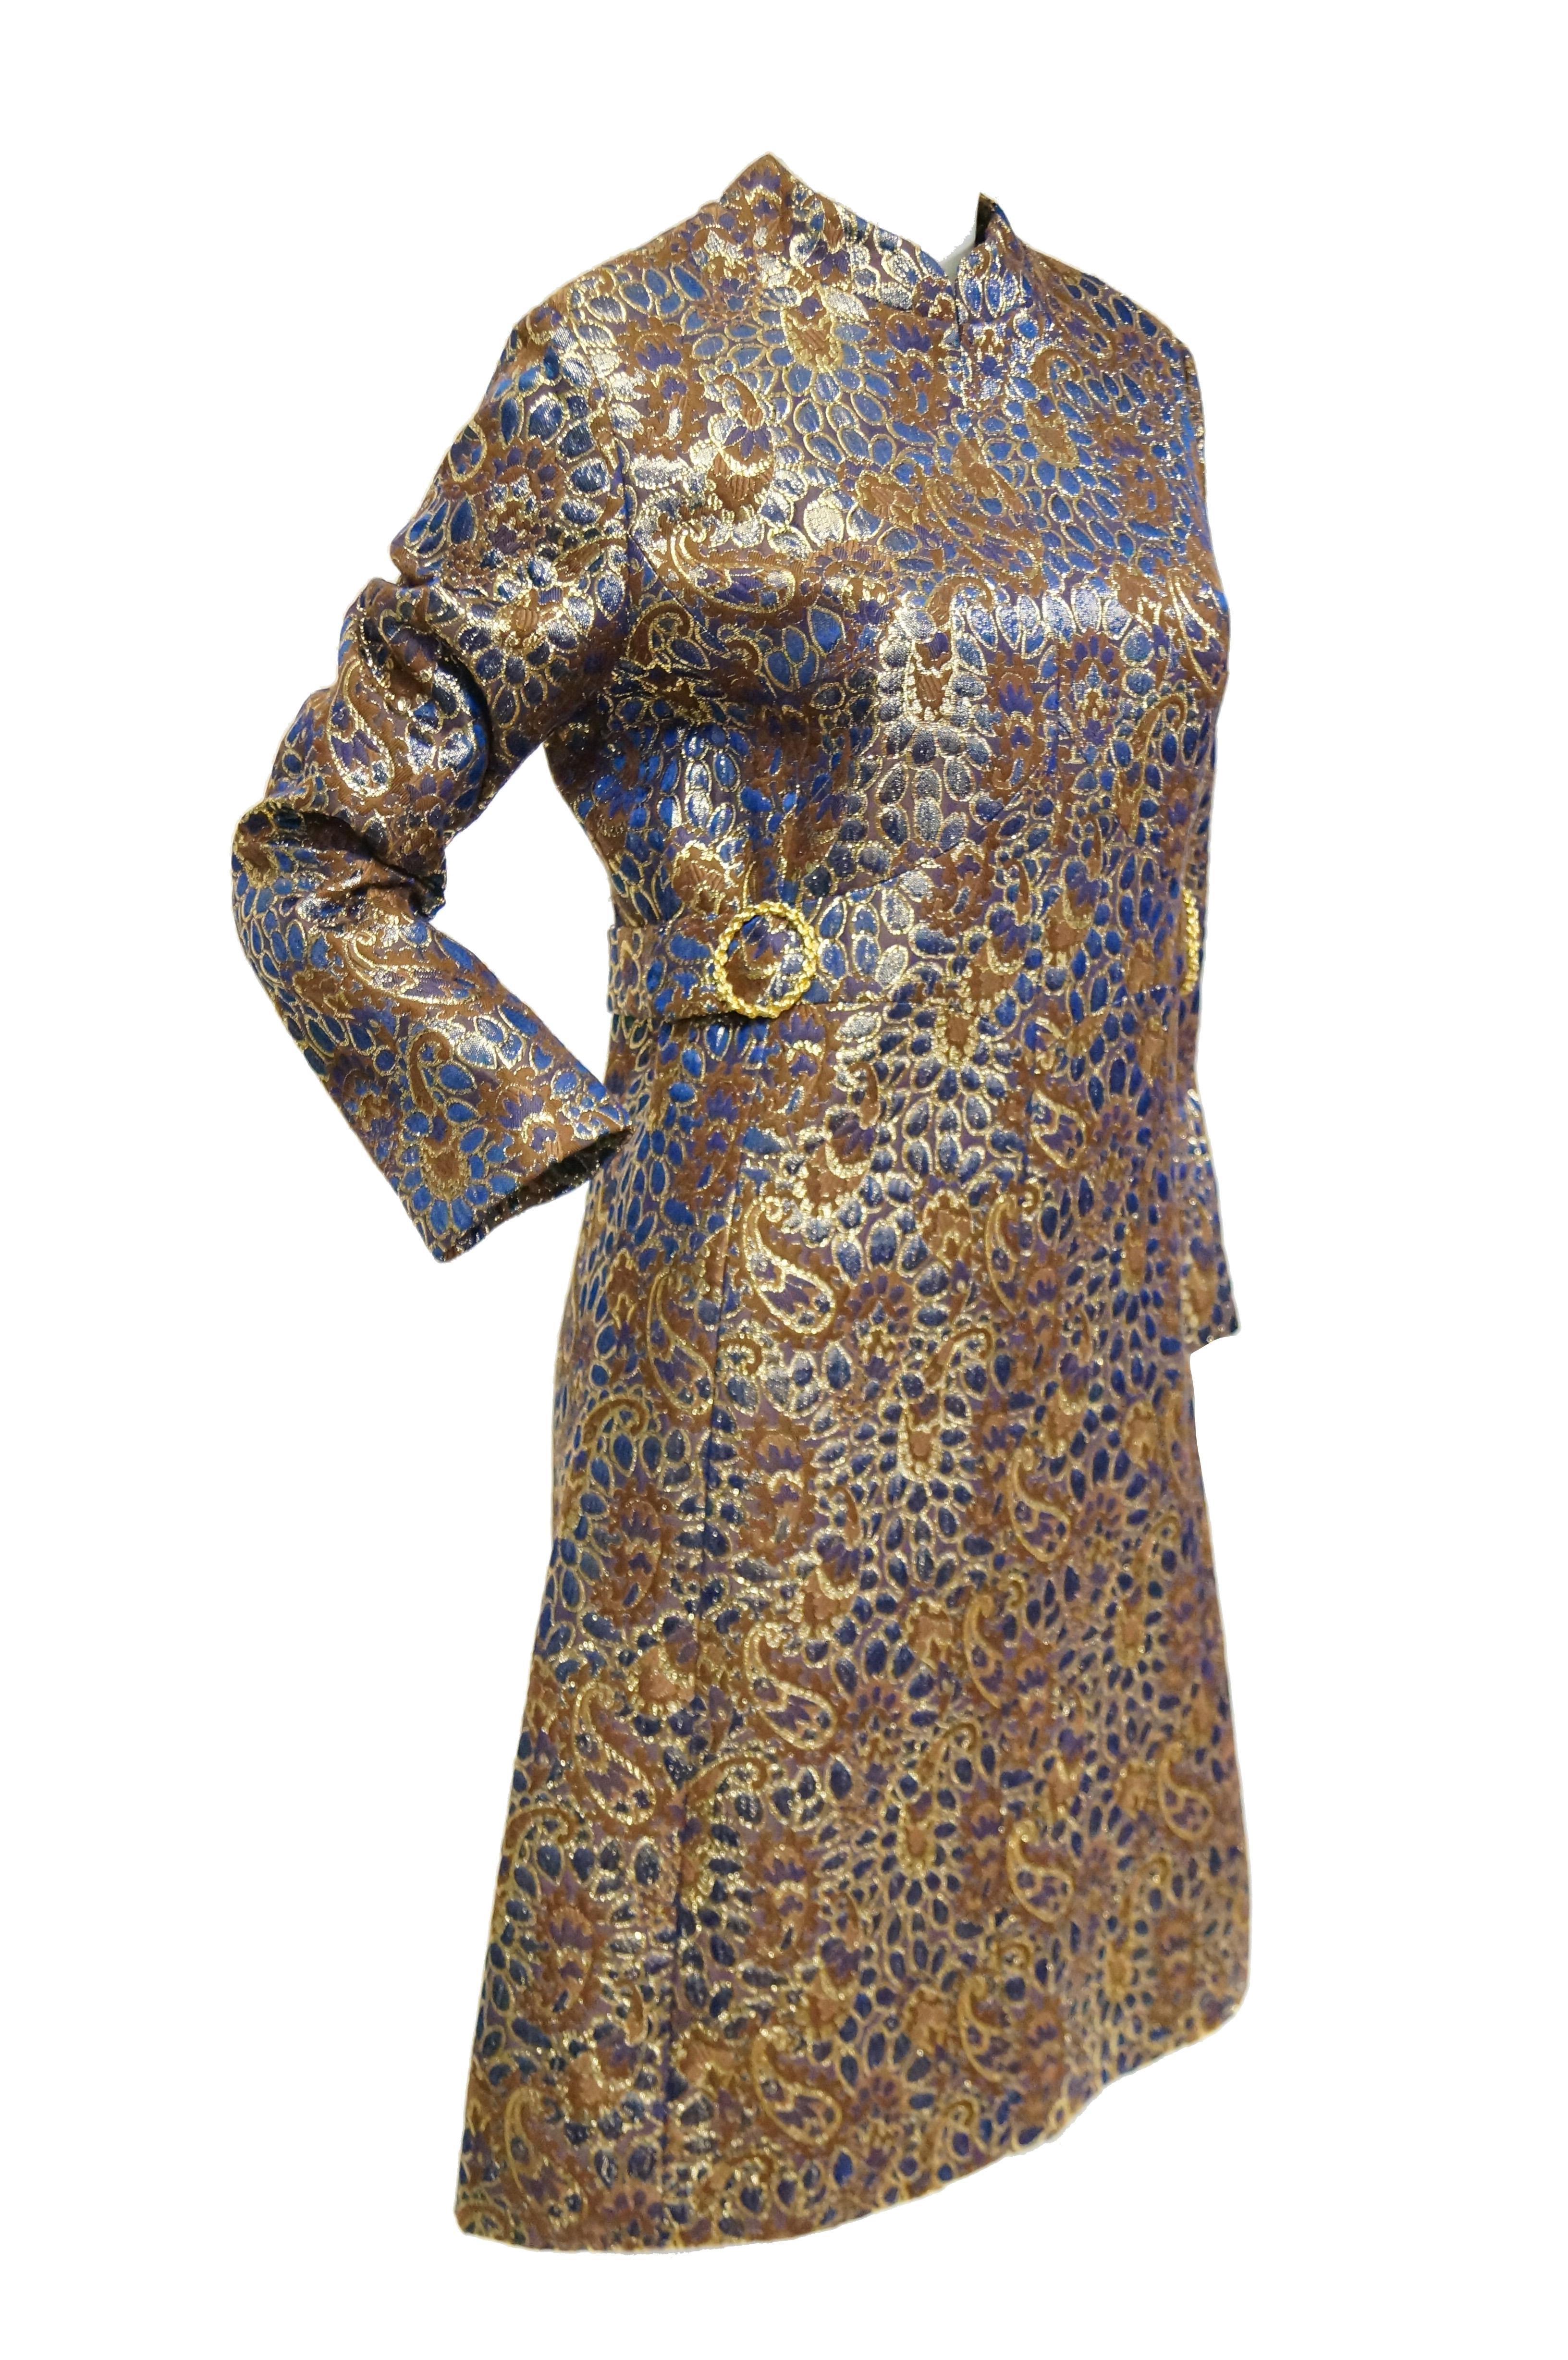 Women's 1960s Iridescent Blue and Brown Floral Brocade Mod Dress